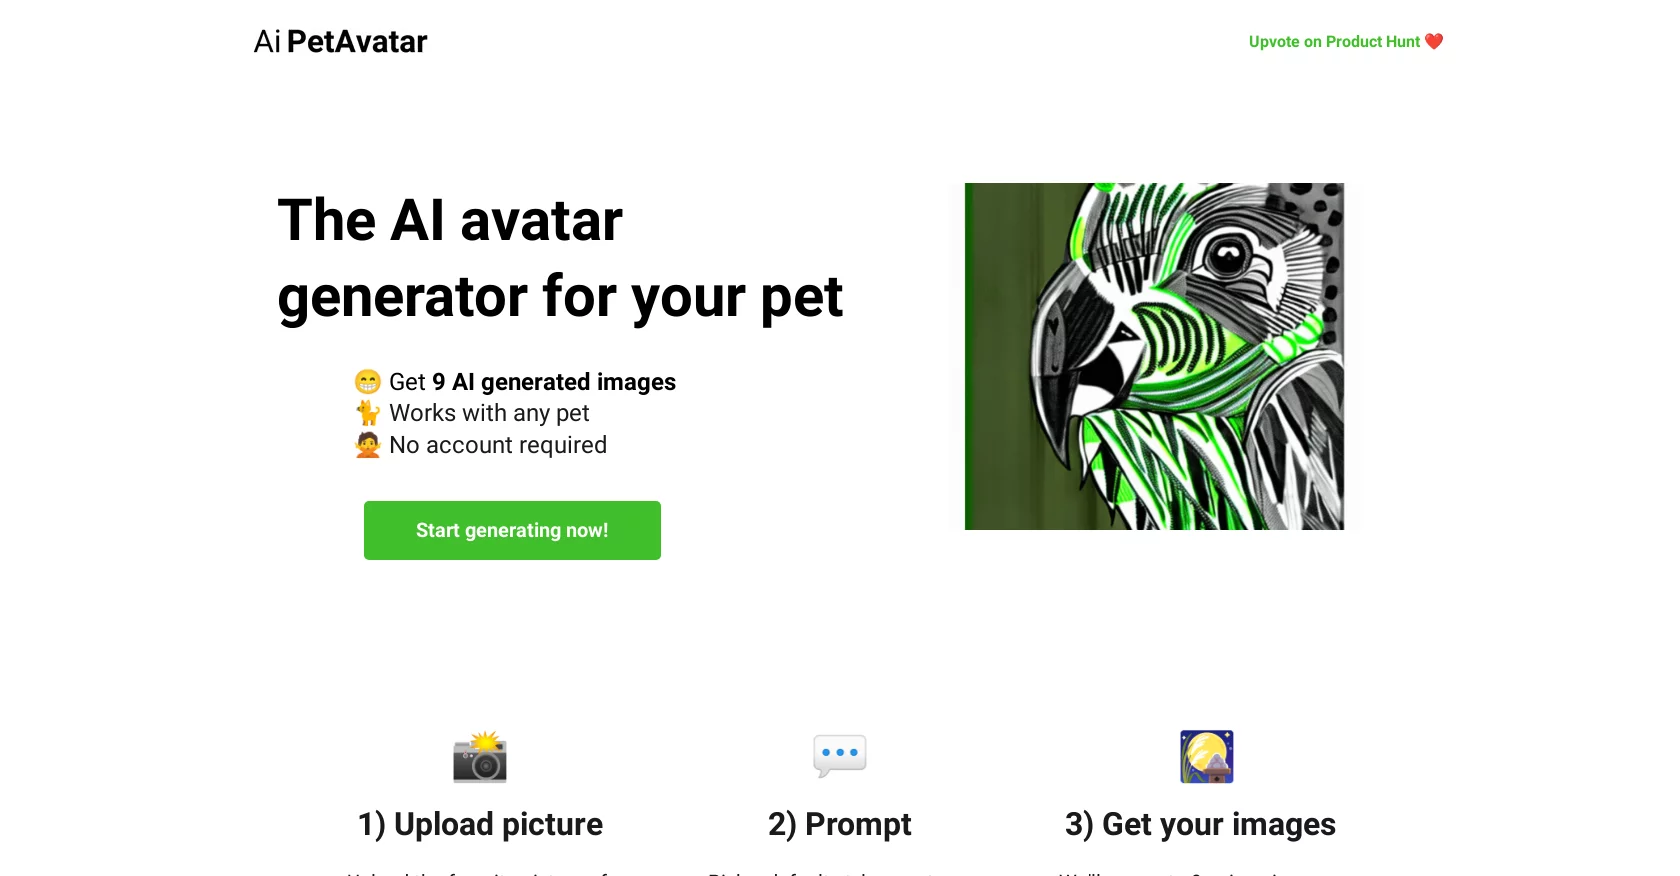  AI pet avatar generator: 9 images, any pet, no